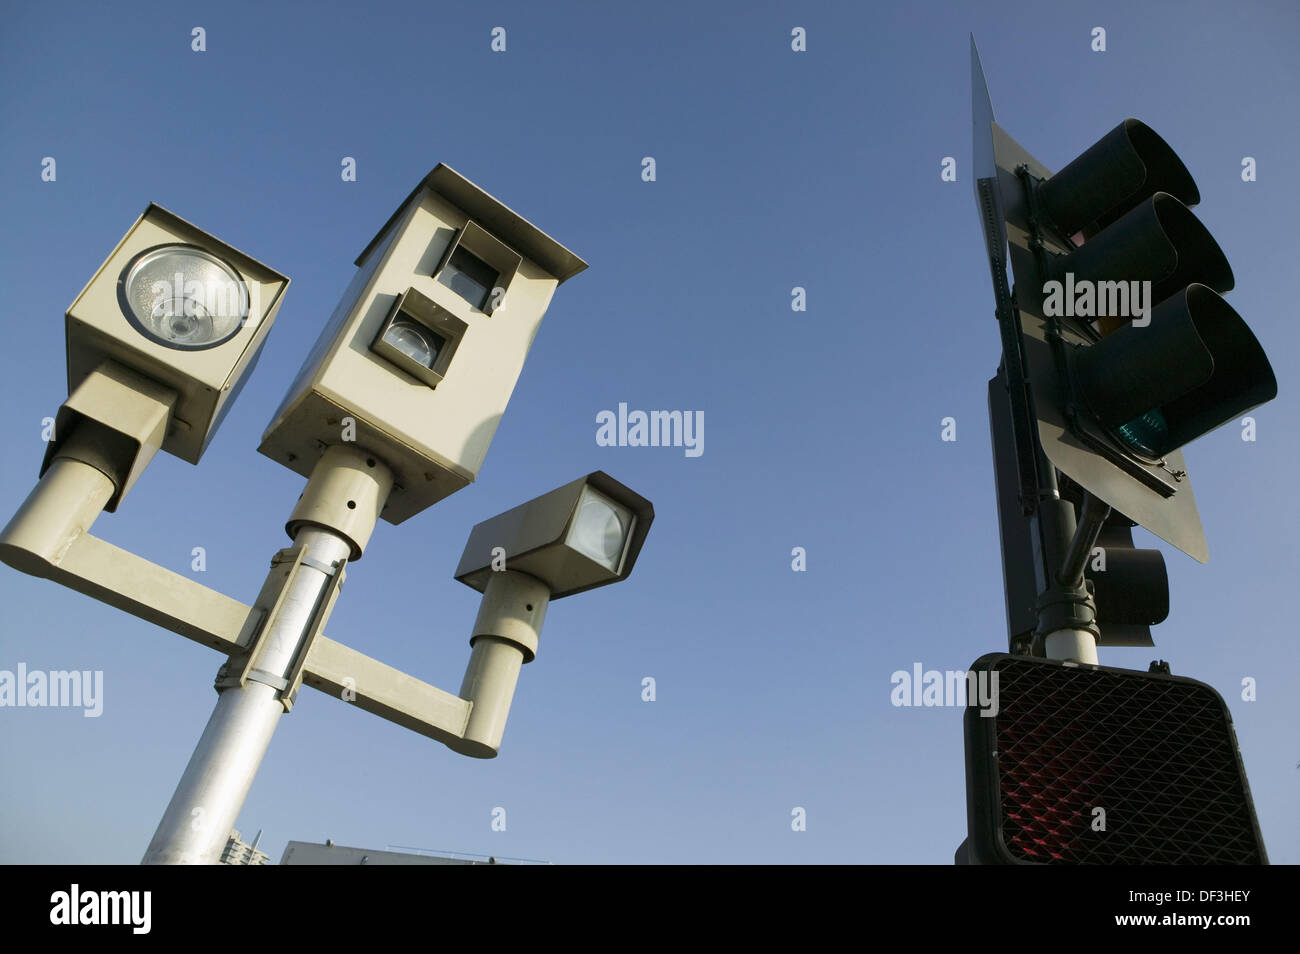 san diego traffic light cameras